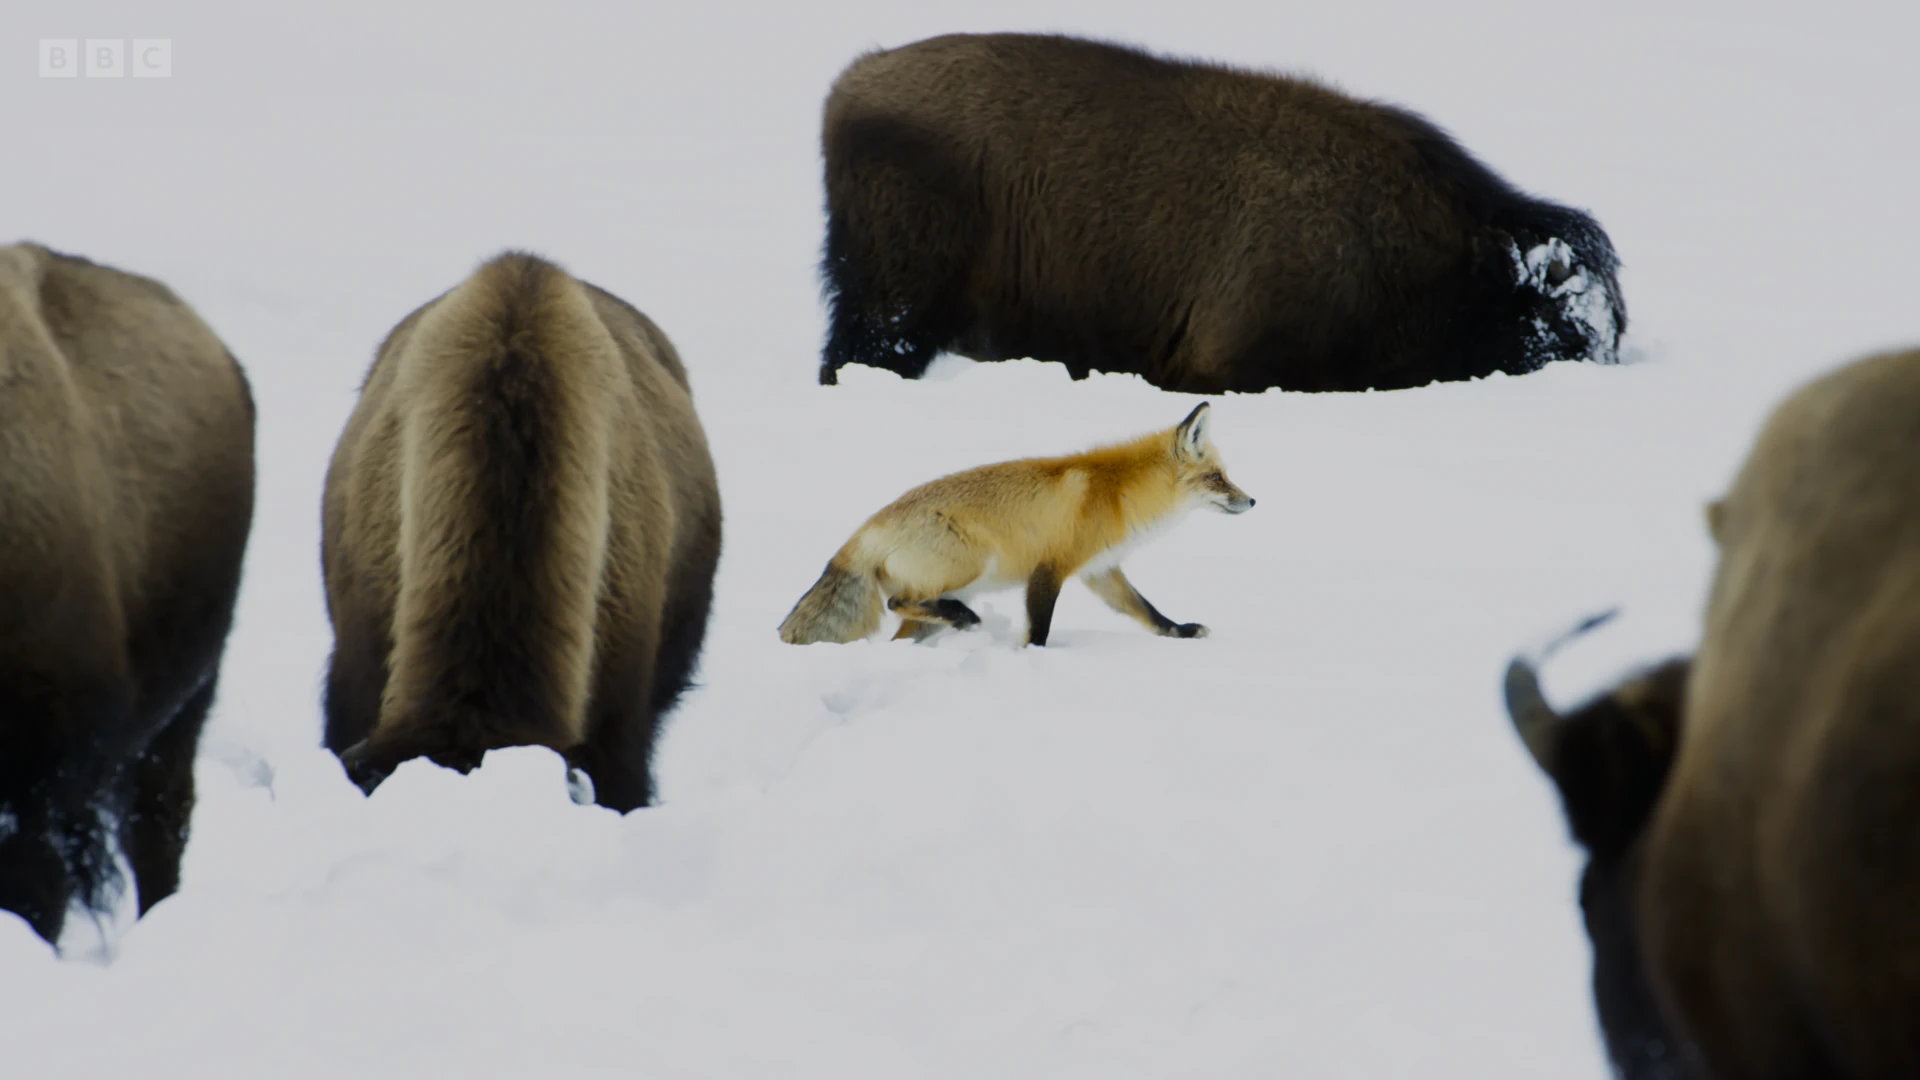 Wasatch Mountain fox (Vulpes vulpes macroura) as shown in Planet Earth II - Grasslands